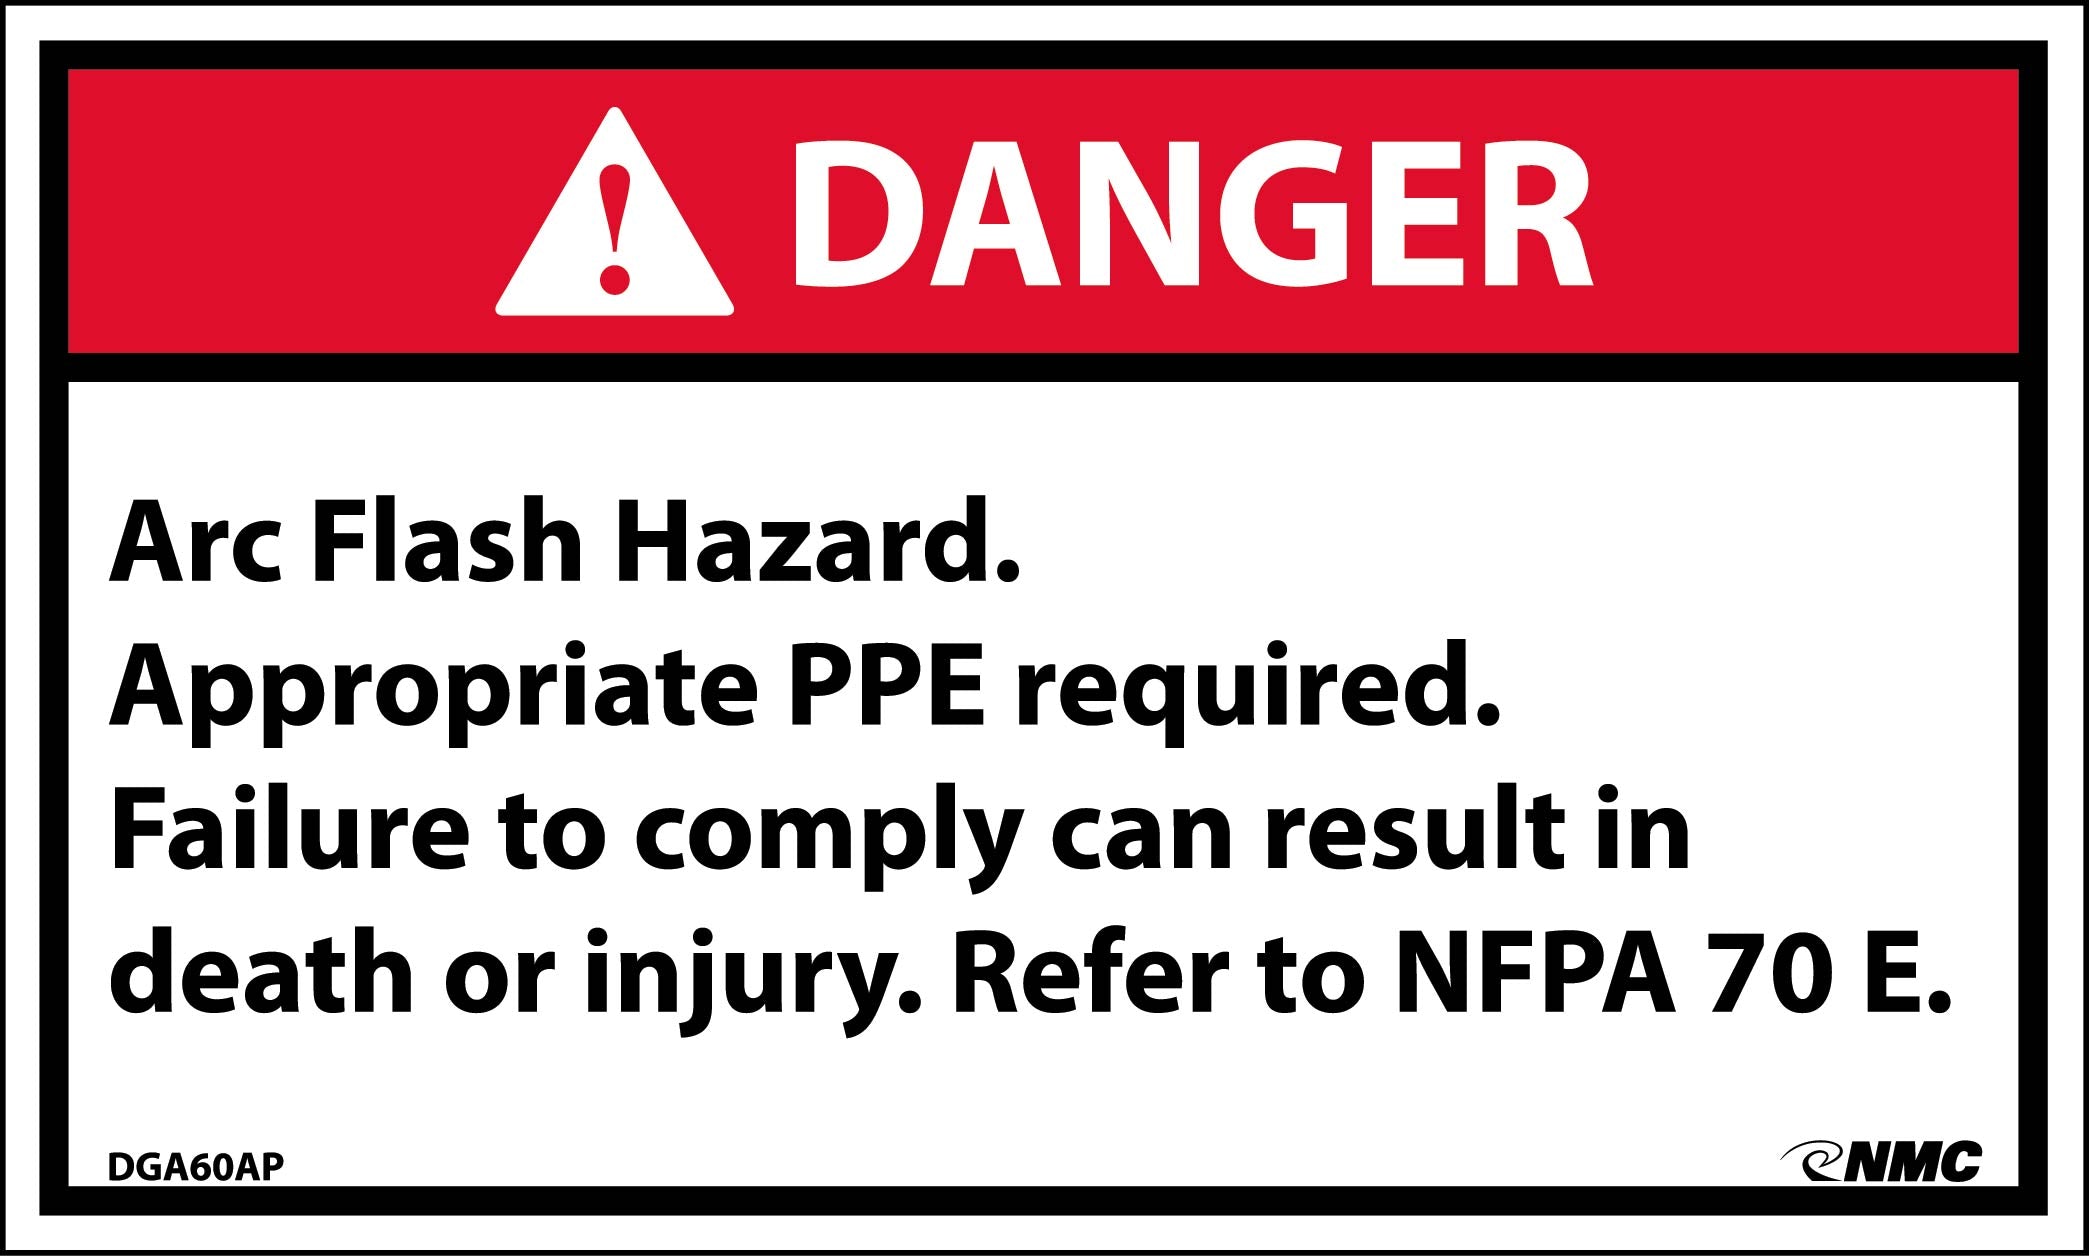 Danger Arc Flash And Shock Hazard Label - 5 Pack-eSafety Supplies, Inc